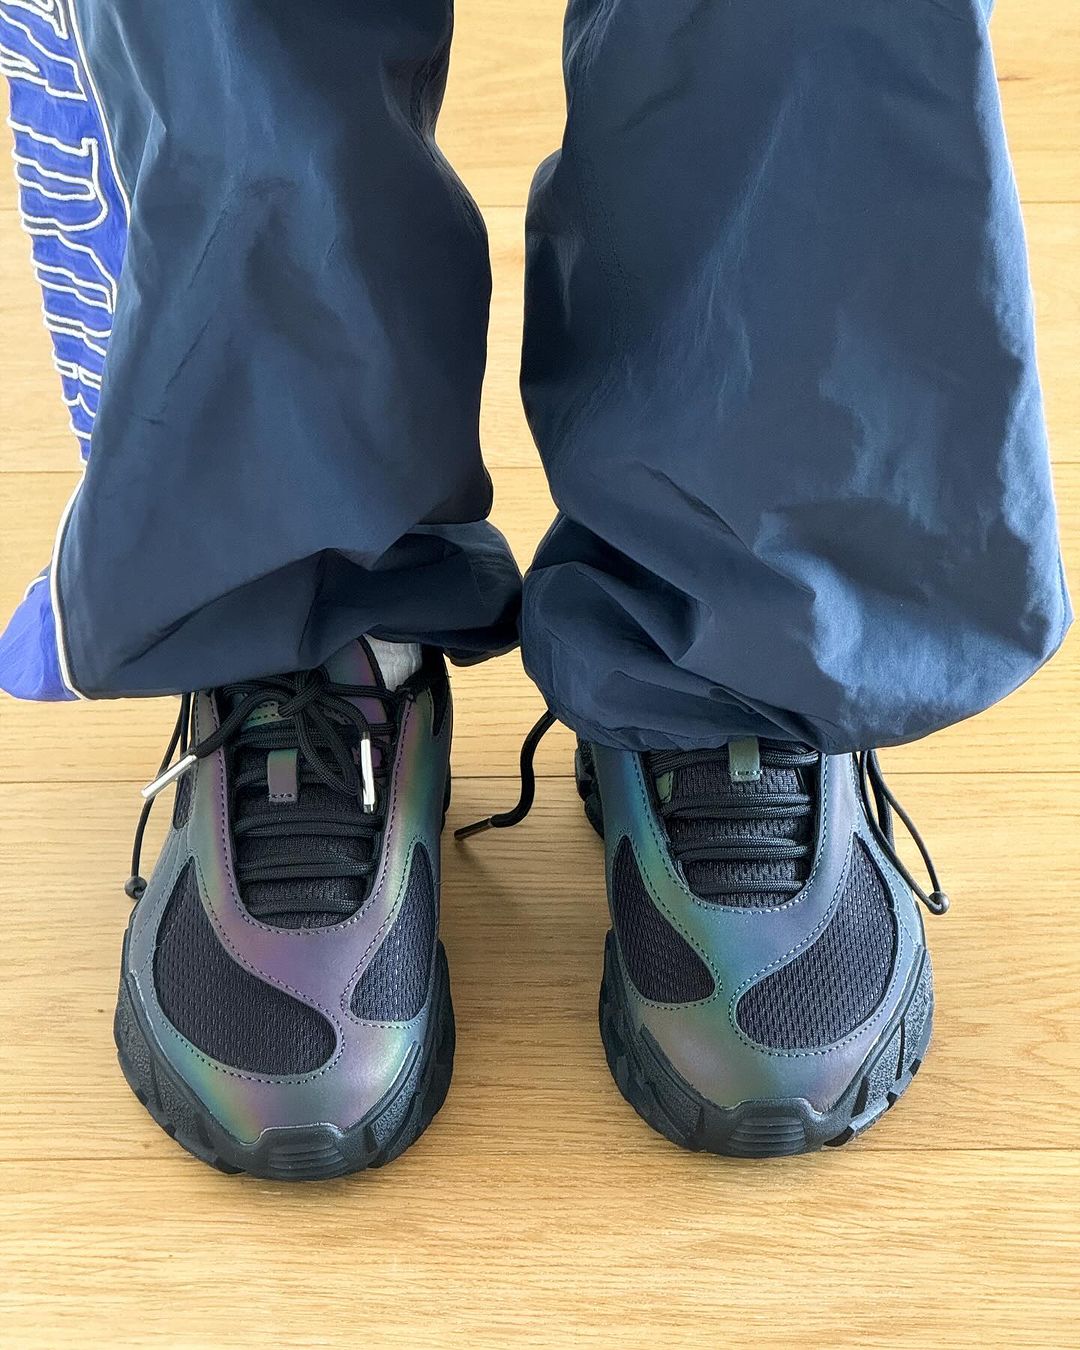 puma vikky platform glitz sneakers jr in greyviolet size